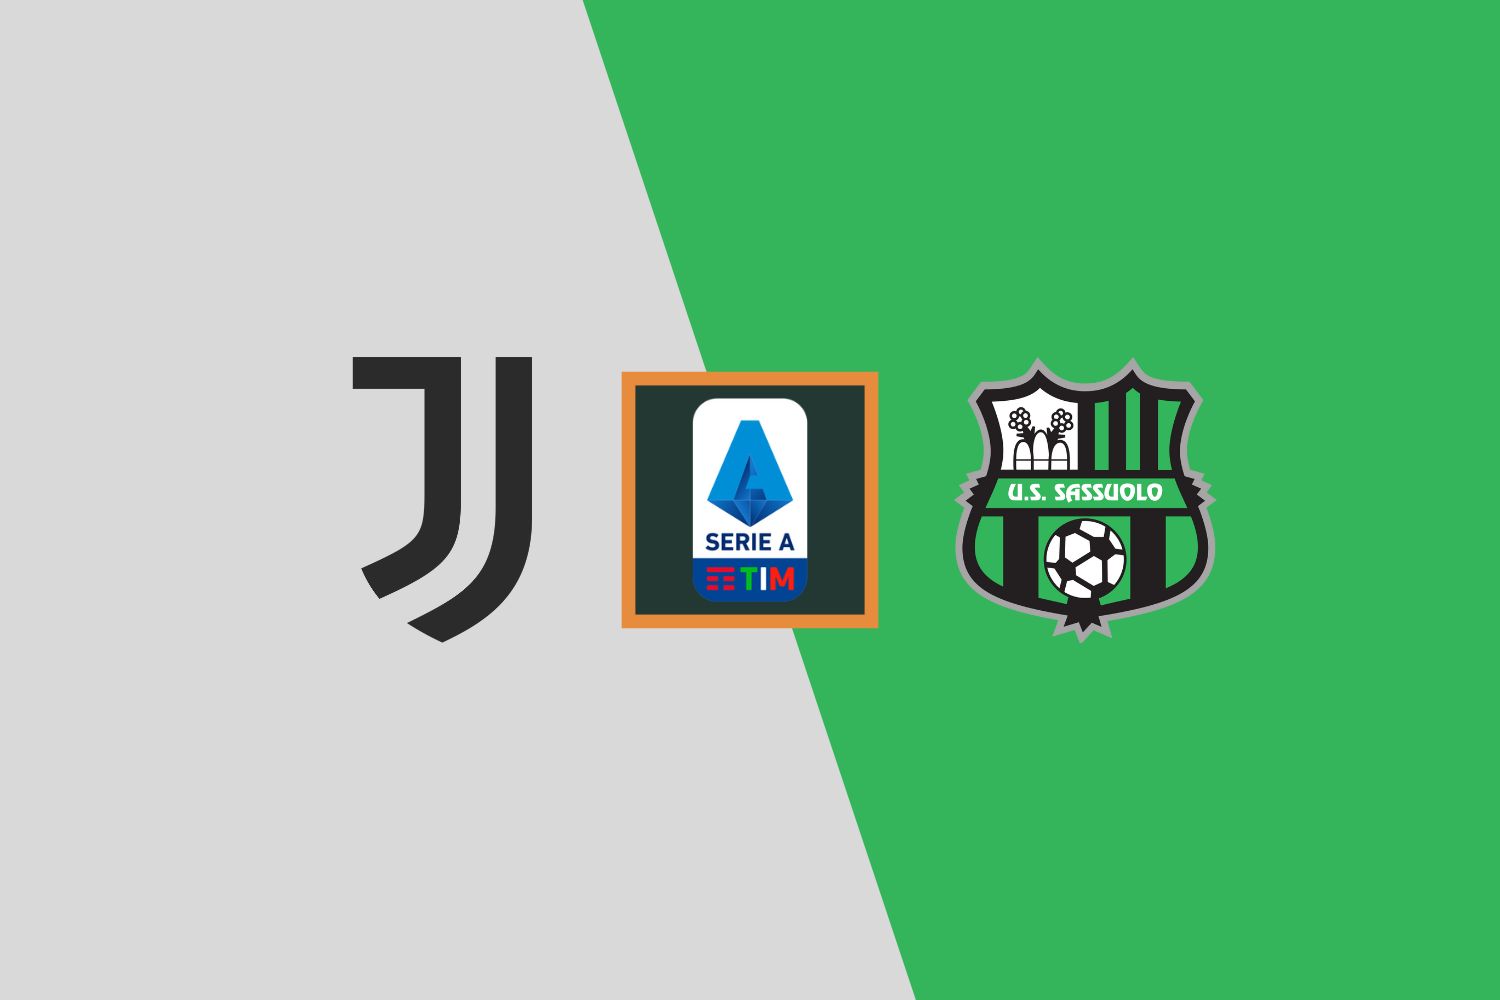 Juventus vs Sassuolo preview & prediction 